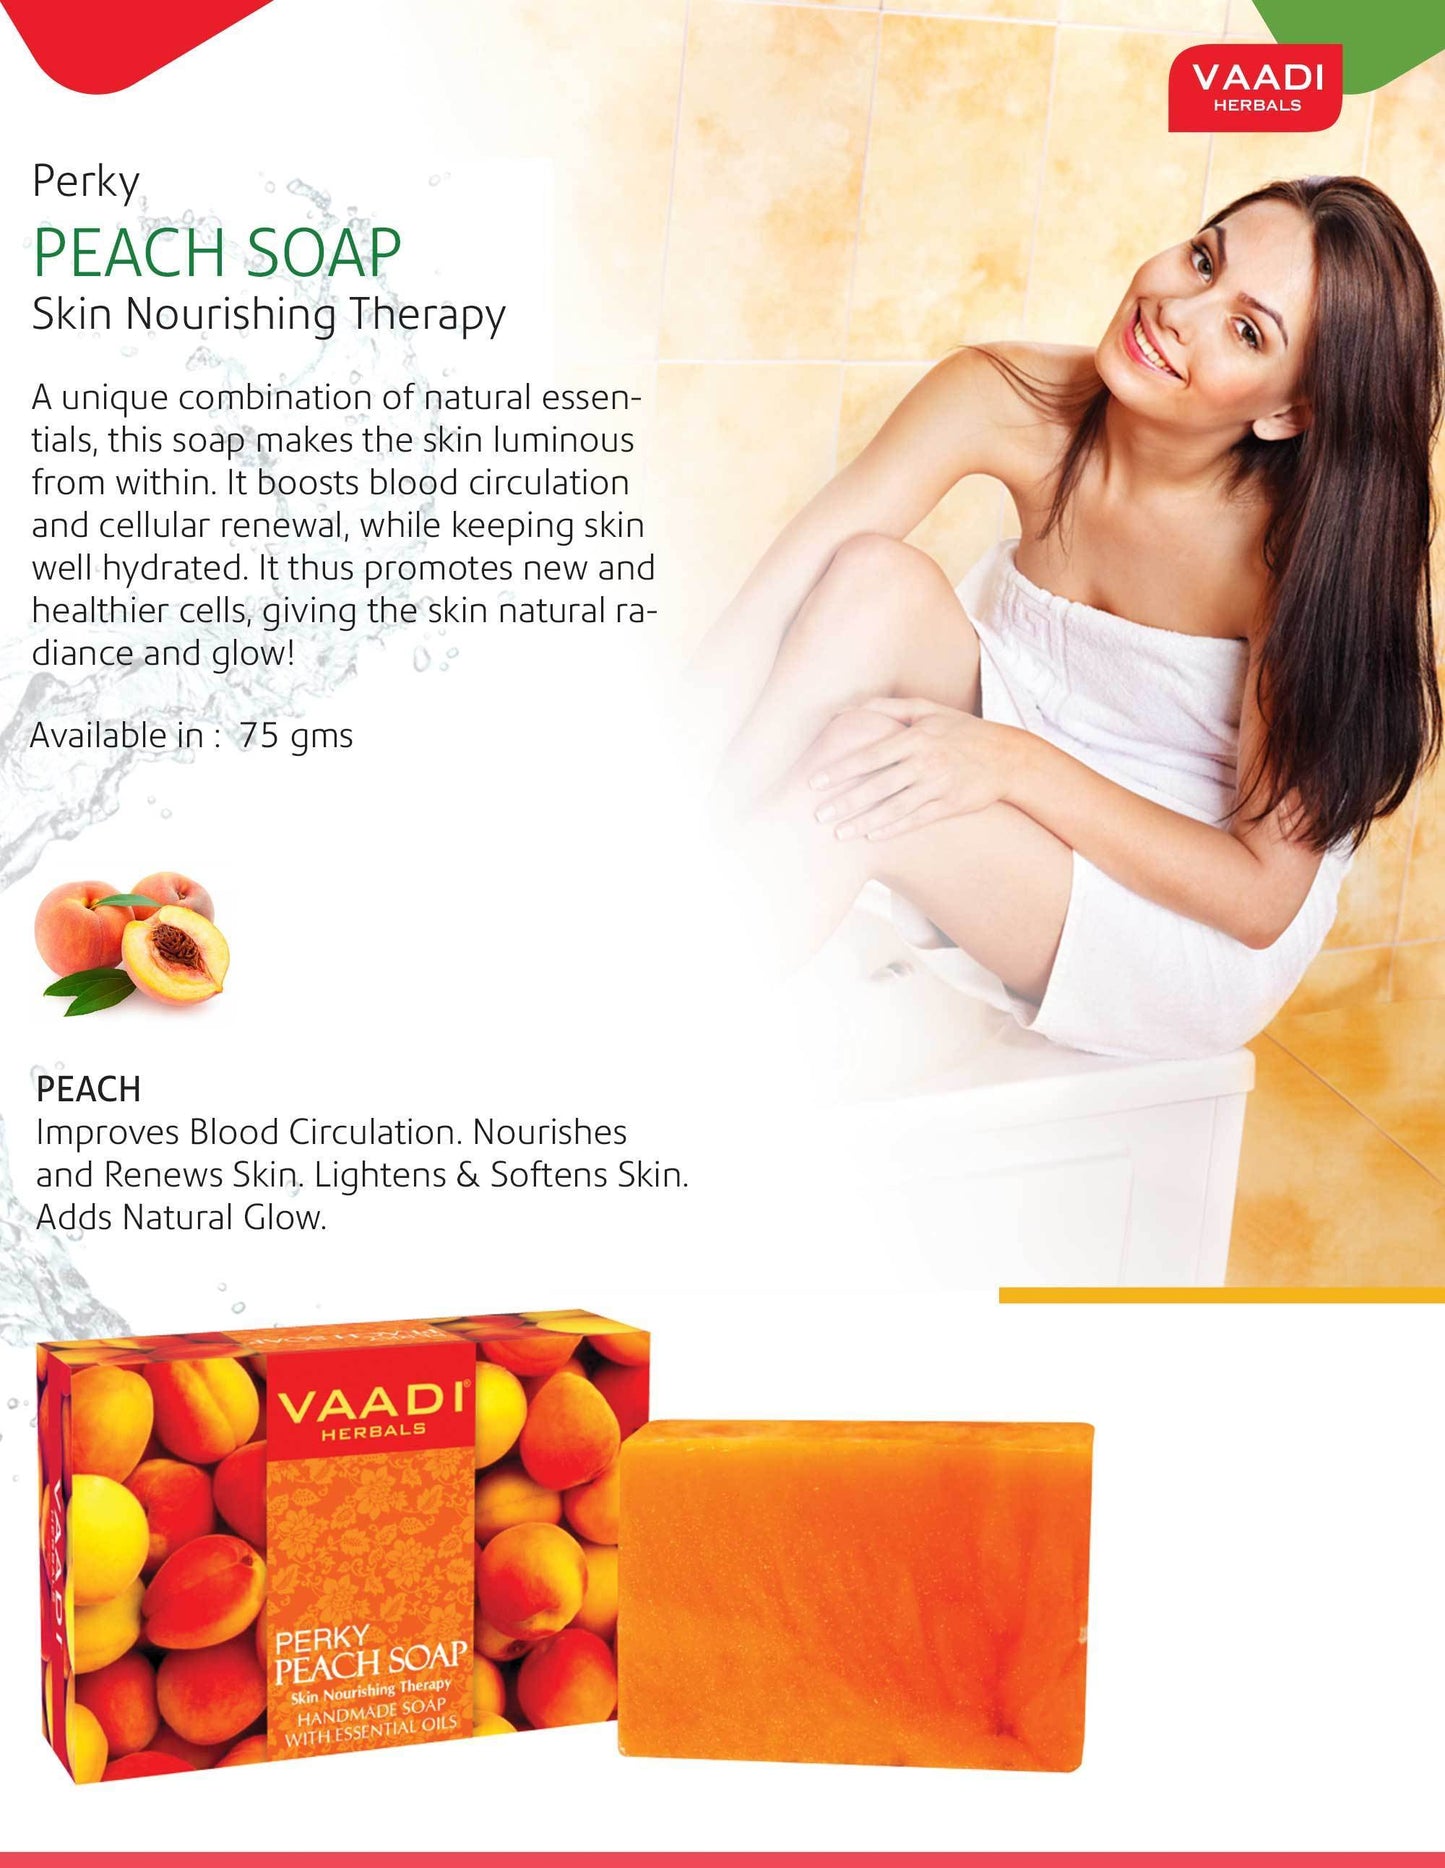 Organic Perky Peach Soap with Almond Oil - Skin Nourishing - Rehydrates (6 x 75 gms / 2.7 oz)